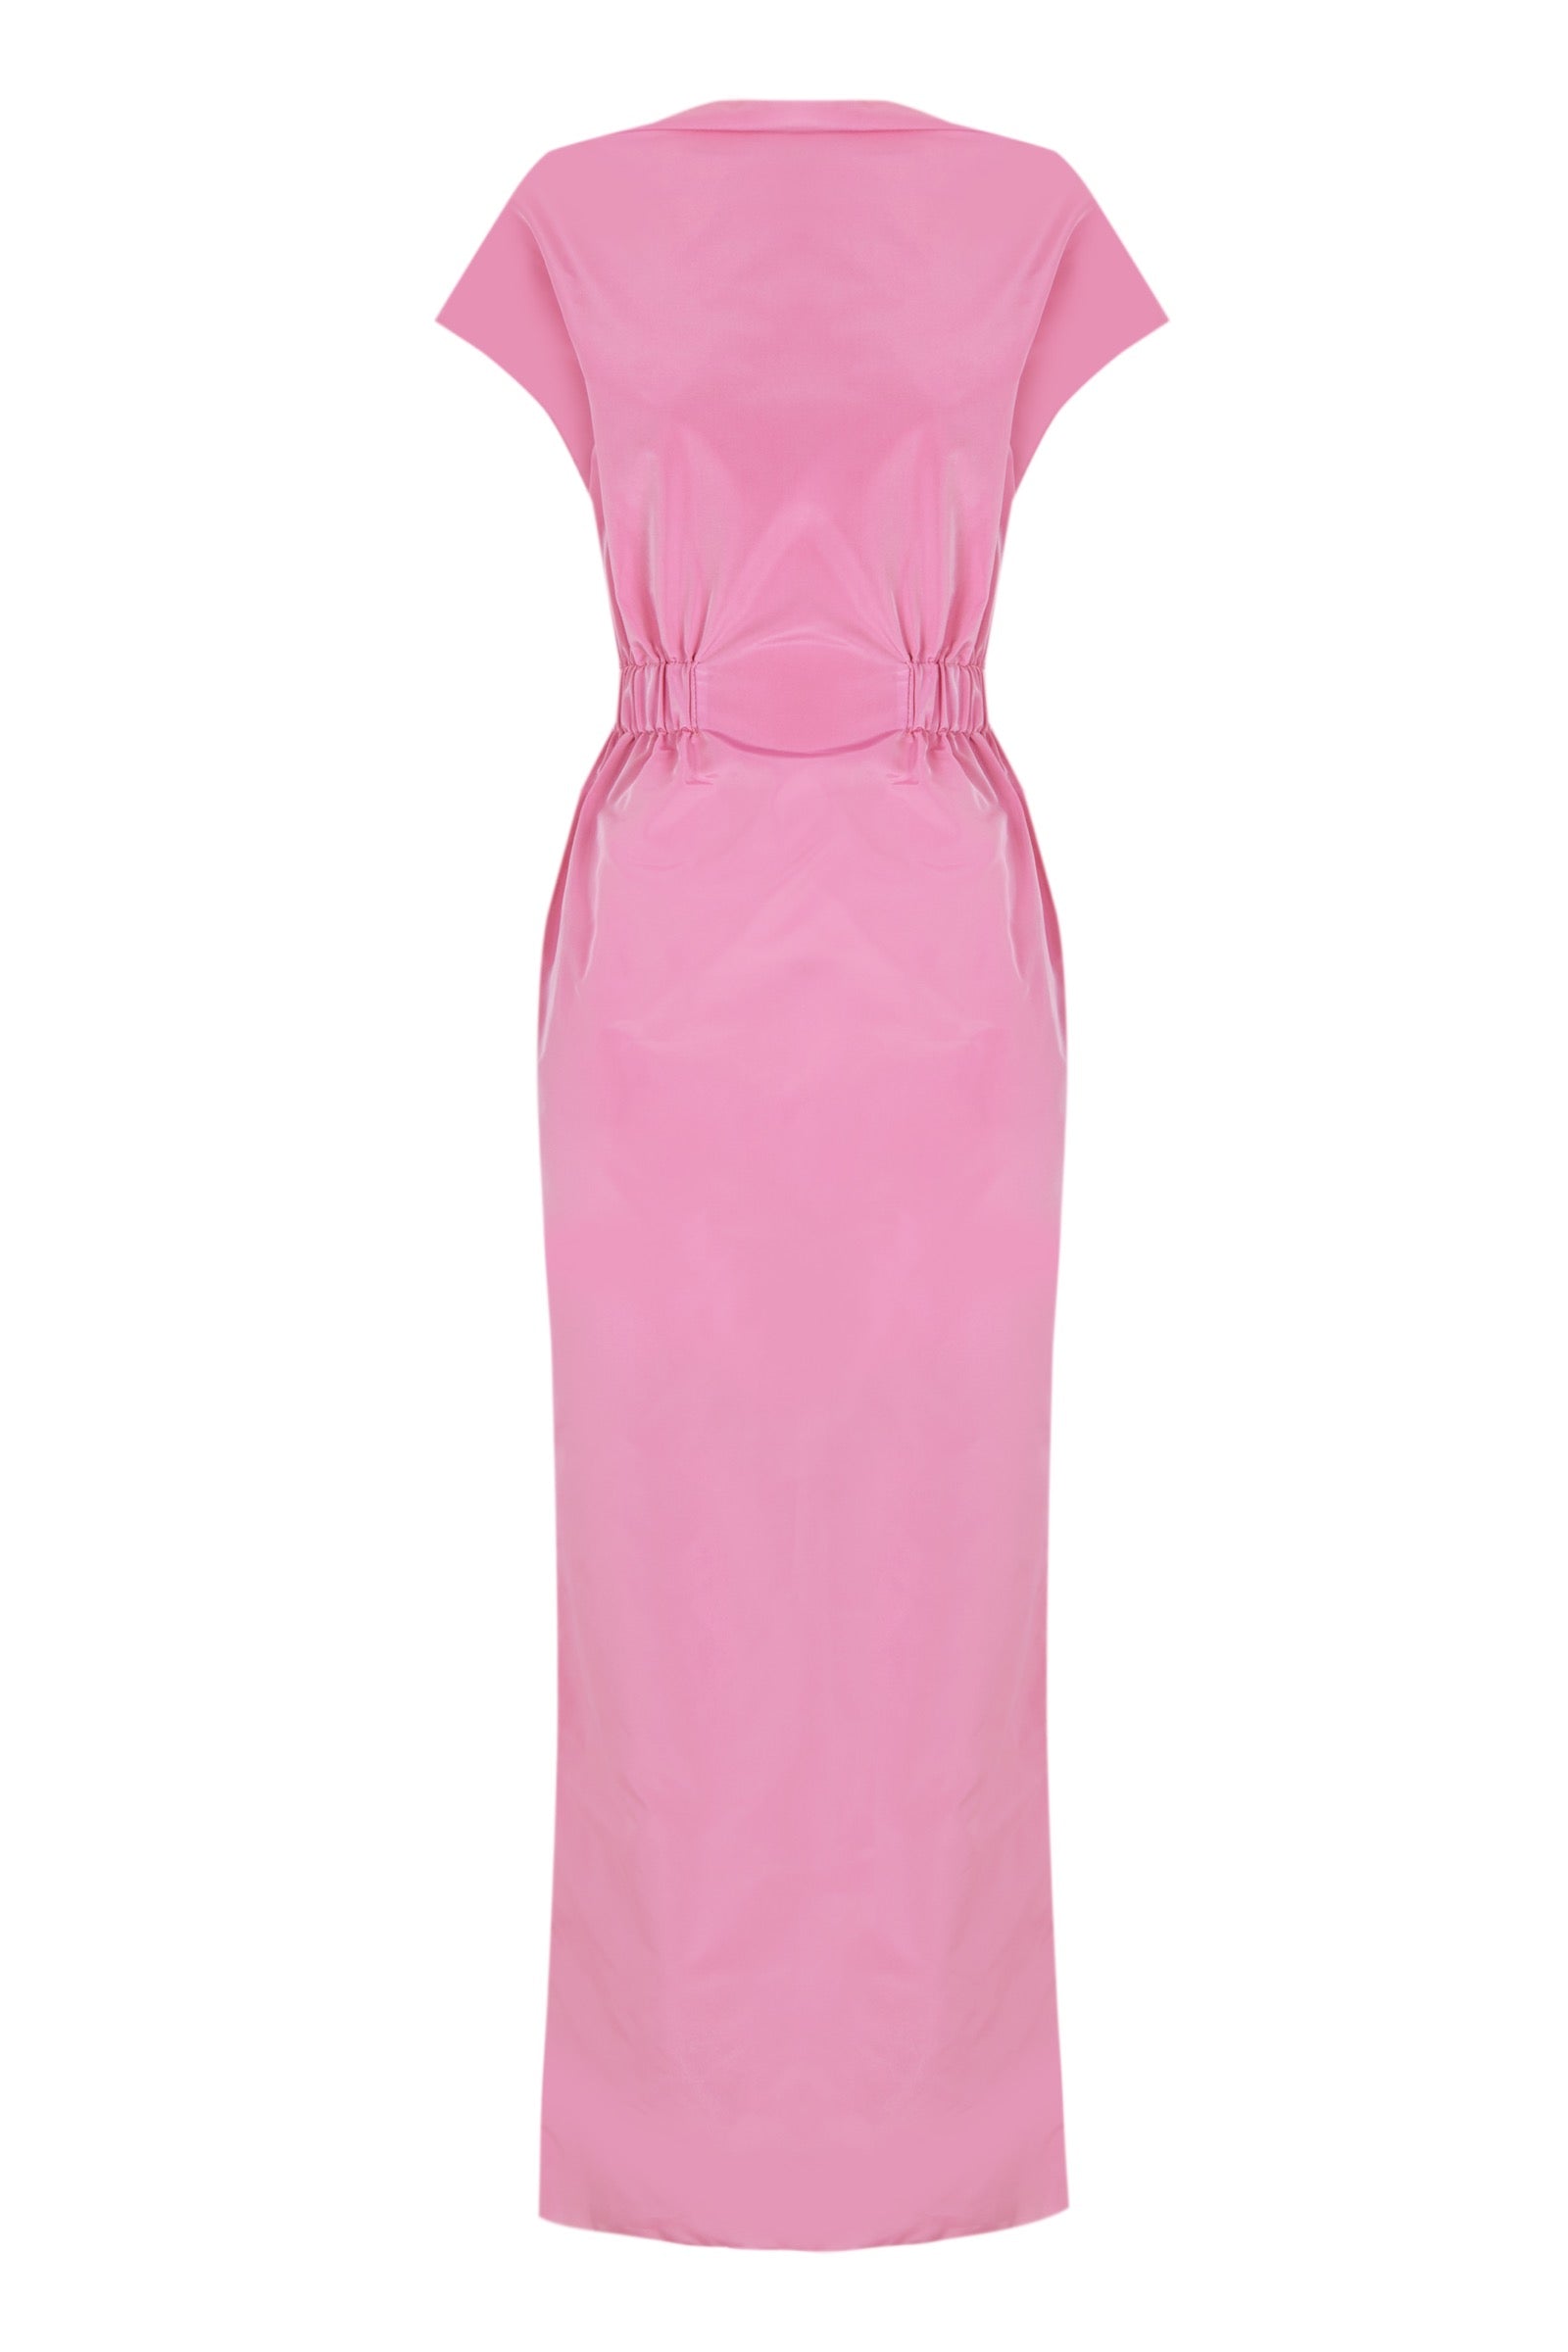 Pink taffeta dress – THE 2ND SKIN CO.